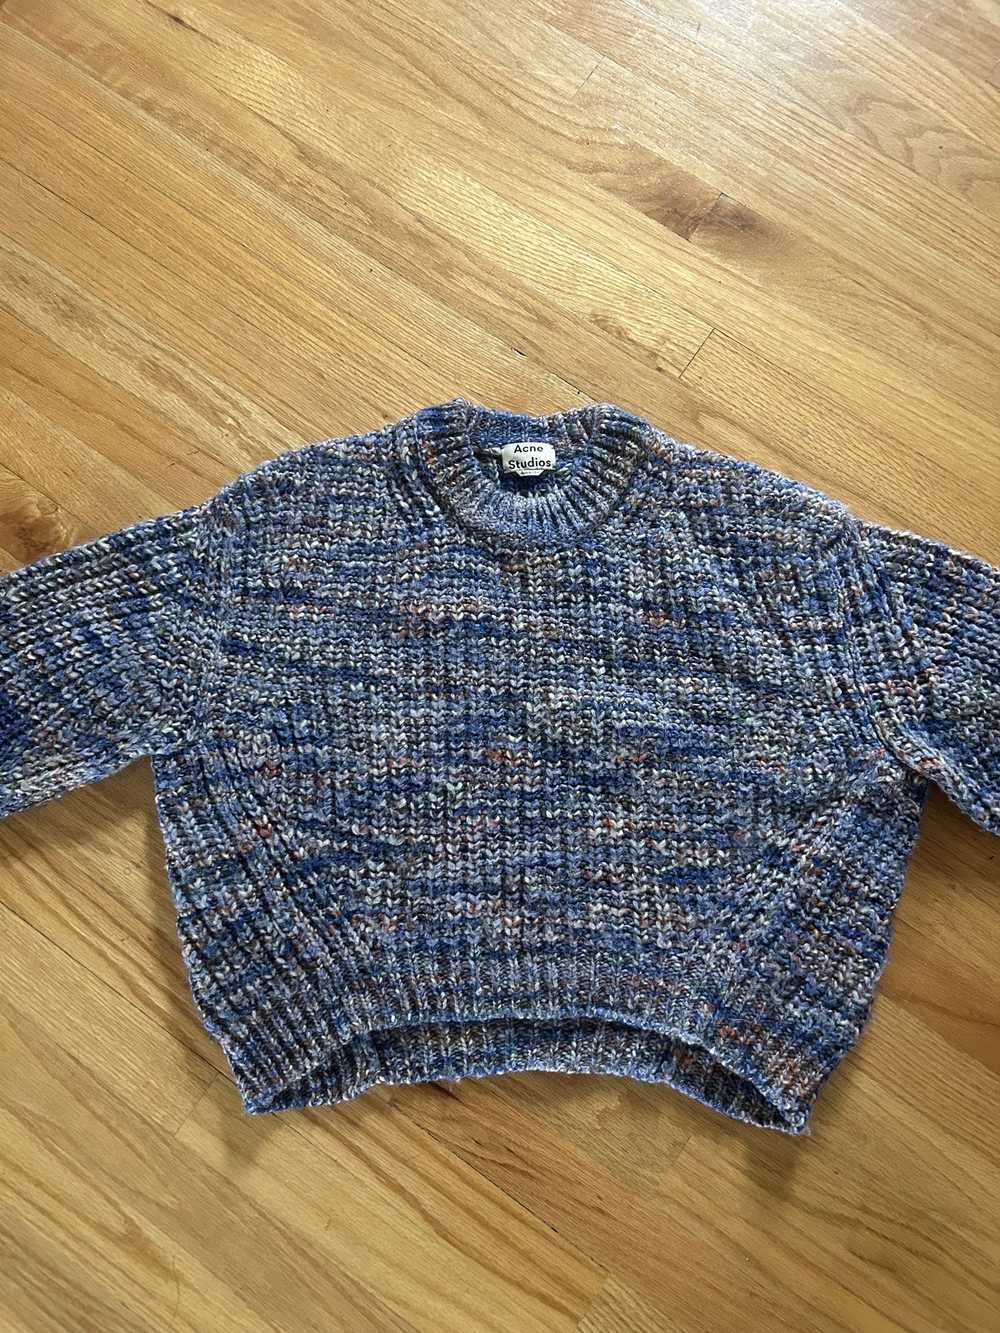 Acne Studios Zora multi knit sweater - image 2